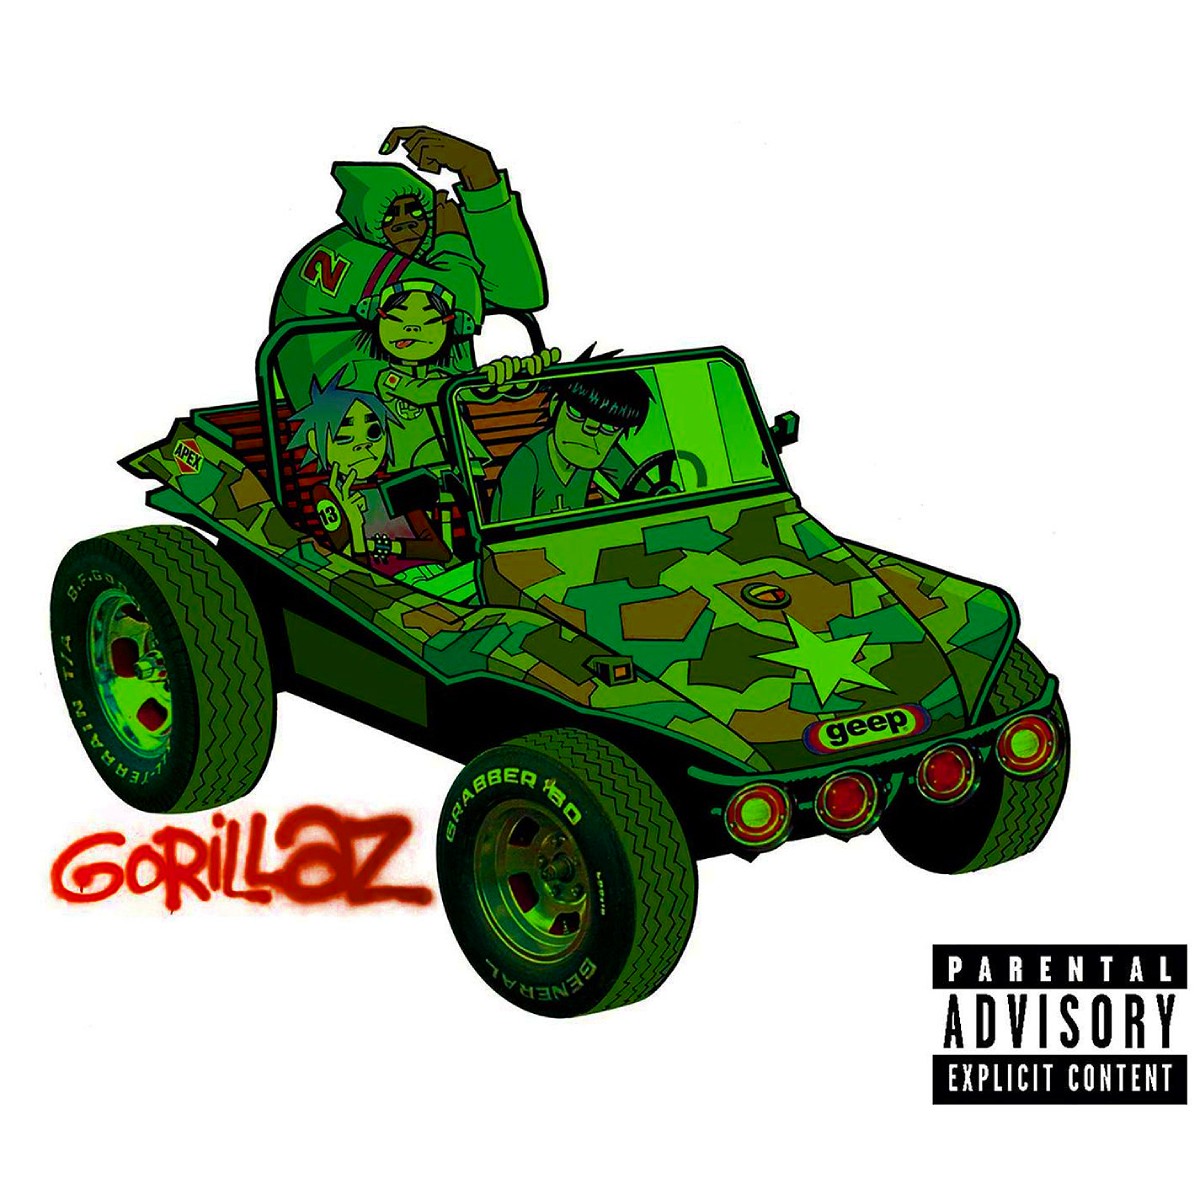 Gorillaz, Gorillaz album